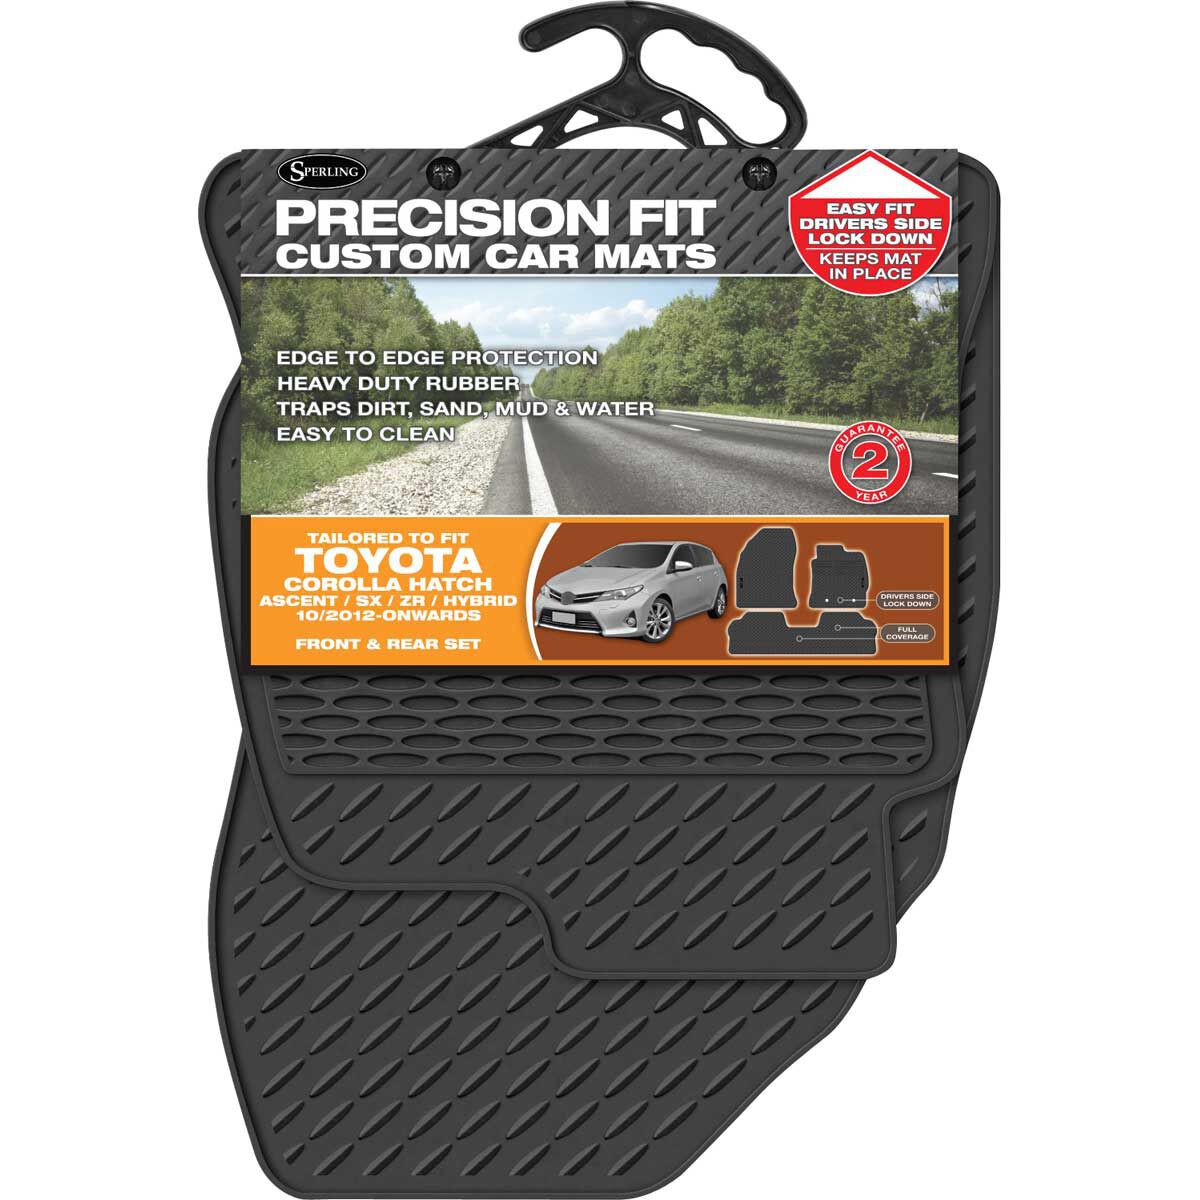 Sperling Precision Fit PVC Custom Floor Mats Suits Toyota Corolla E180 Series 2012-2018, Black, Set of 3, , scaau_hi-res